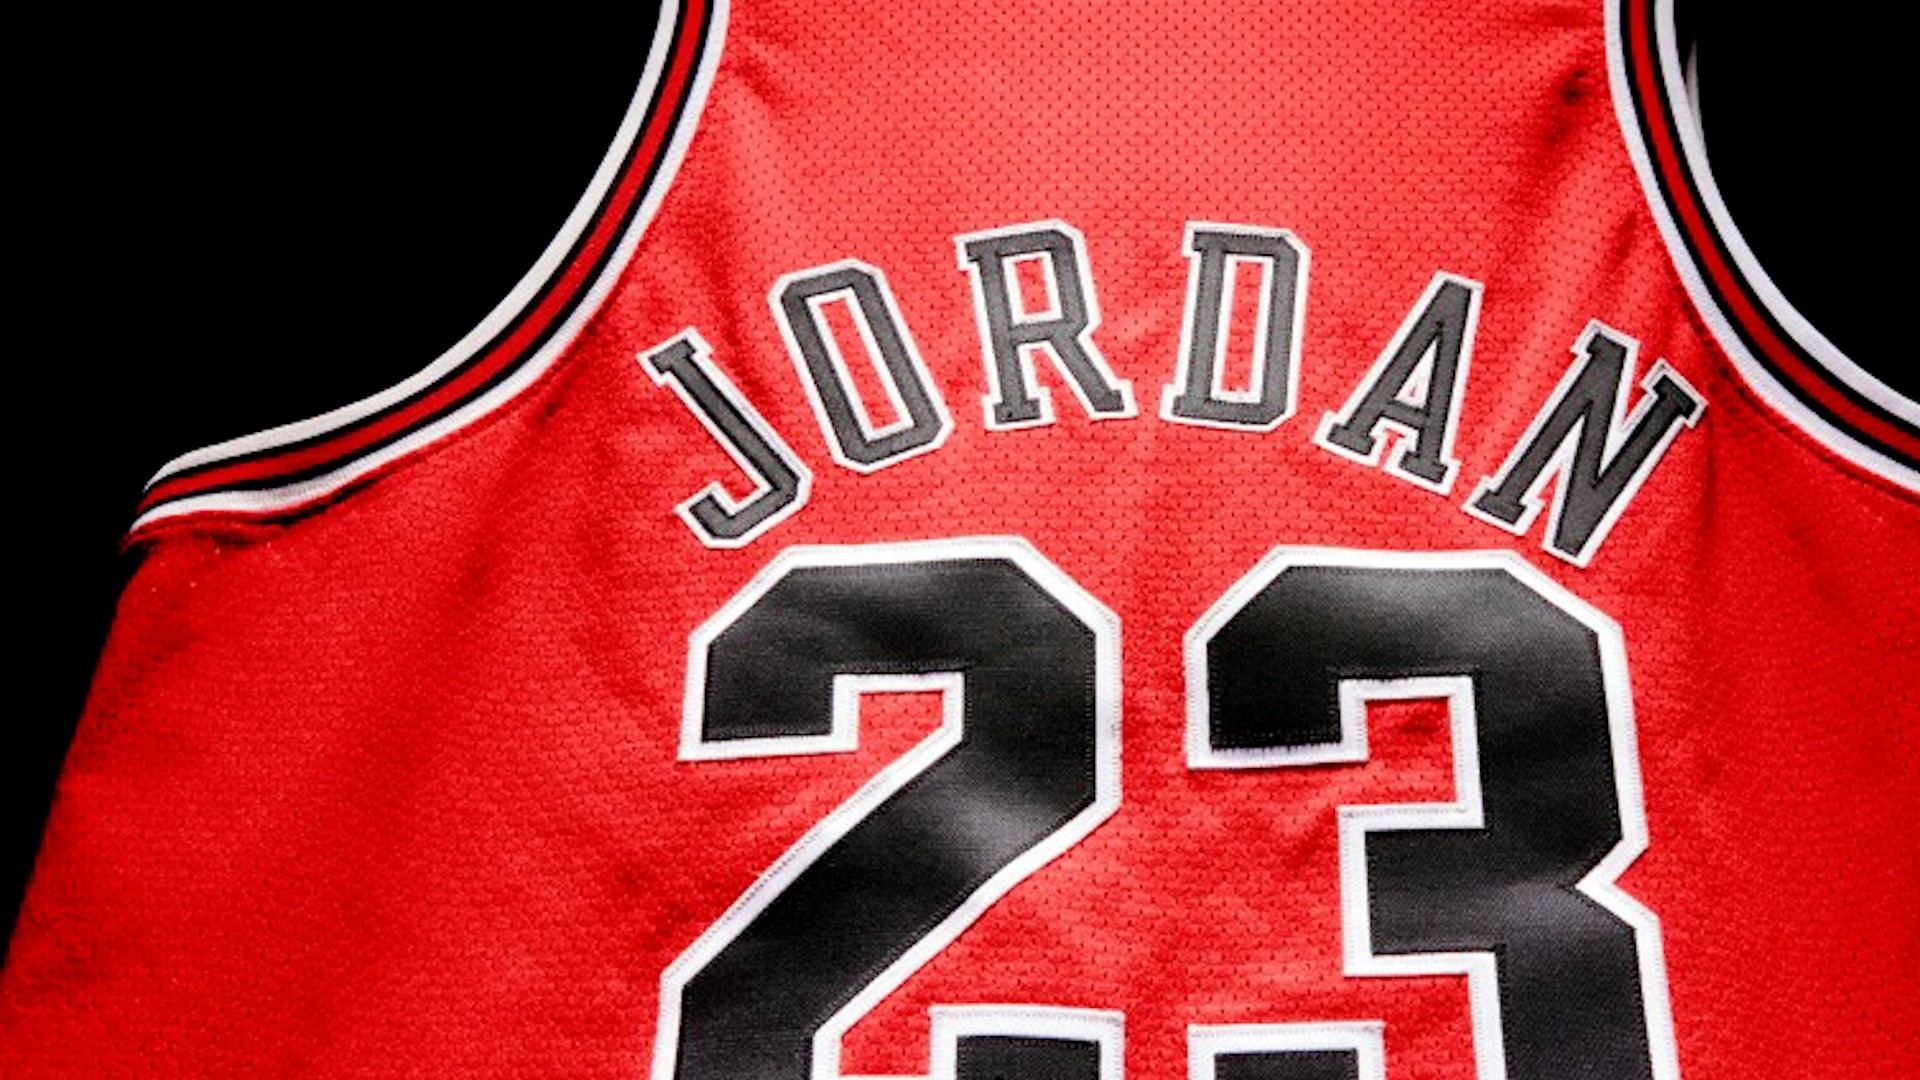 brændstof form kirurg Michael Jordan 'Last Dance' jersey sets record with $10.1 million sale -  NBC Sports Chicago